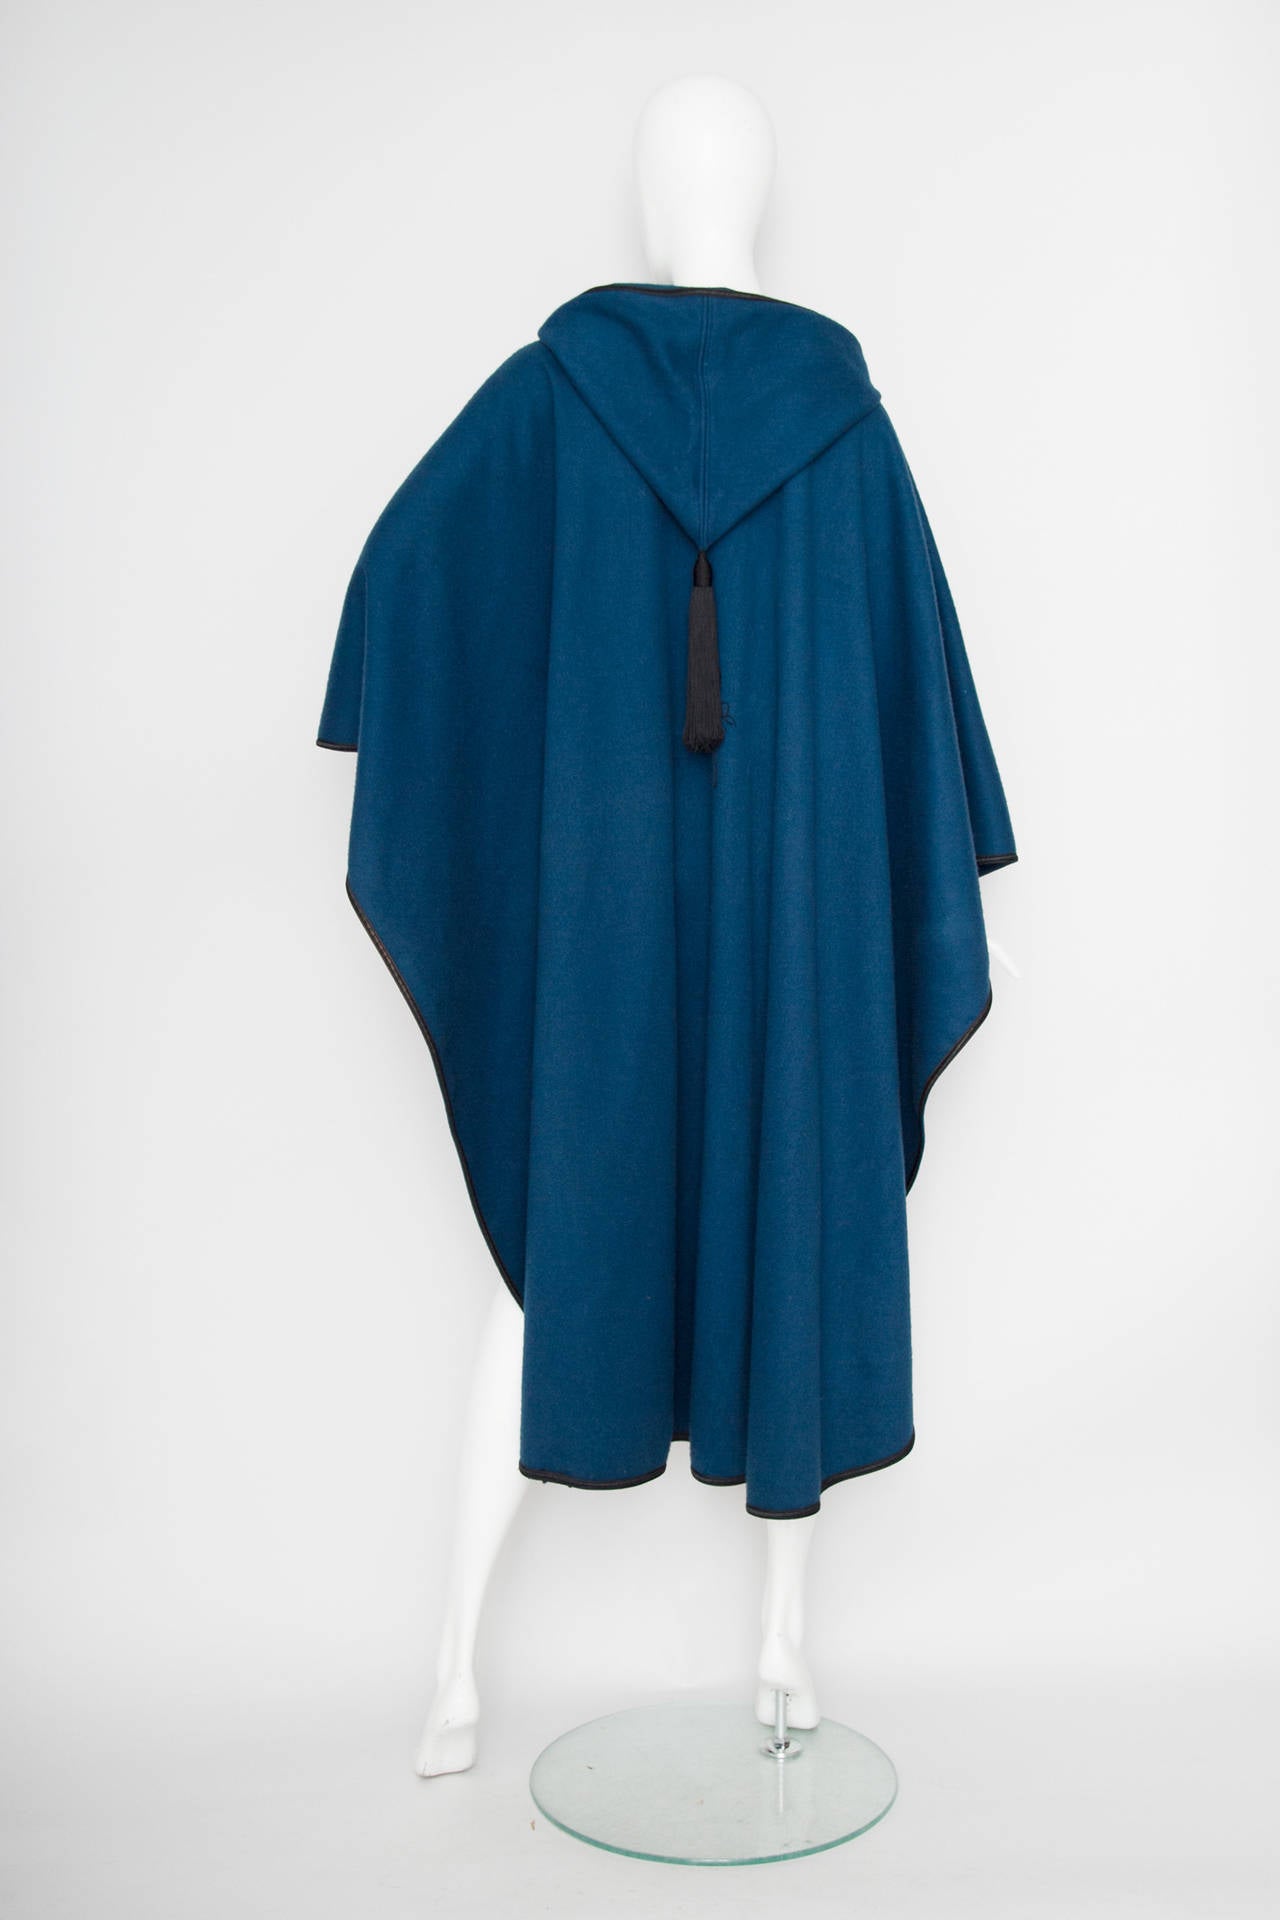 Women's 1970s Yves Saint Laurent Rive Gauche Teal Blue Wool Cape